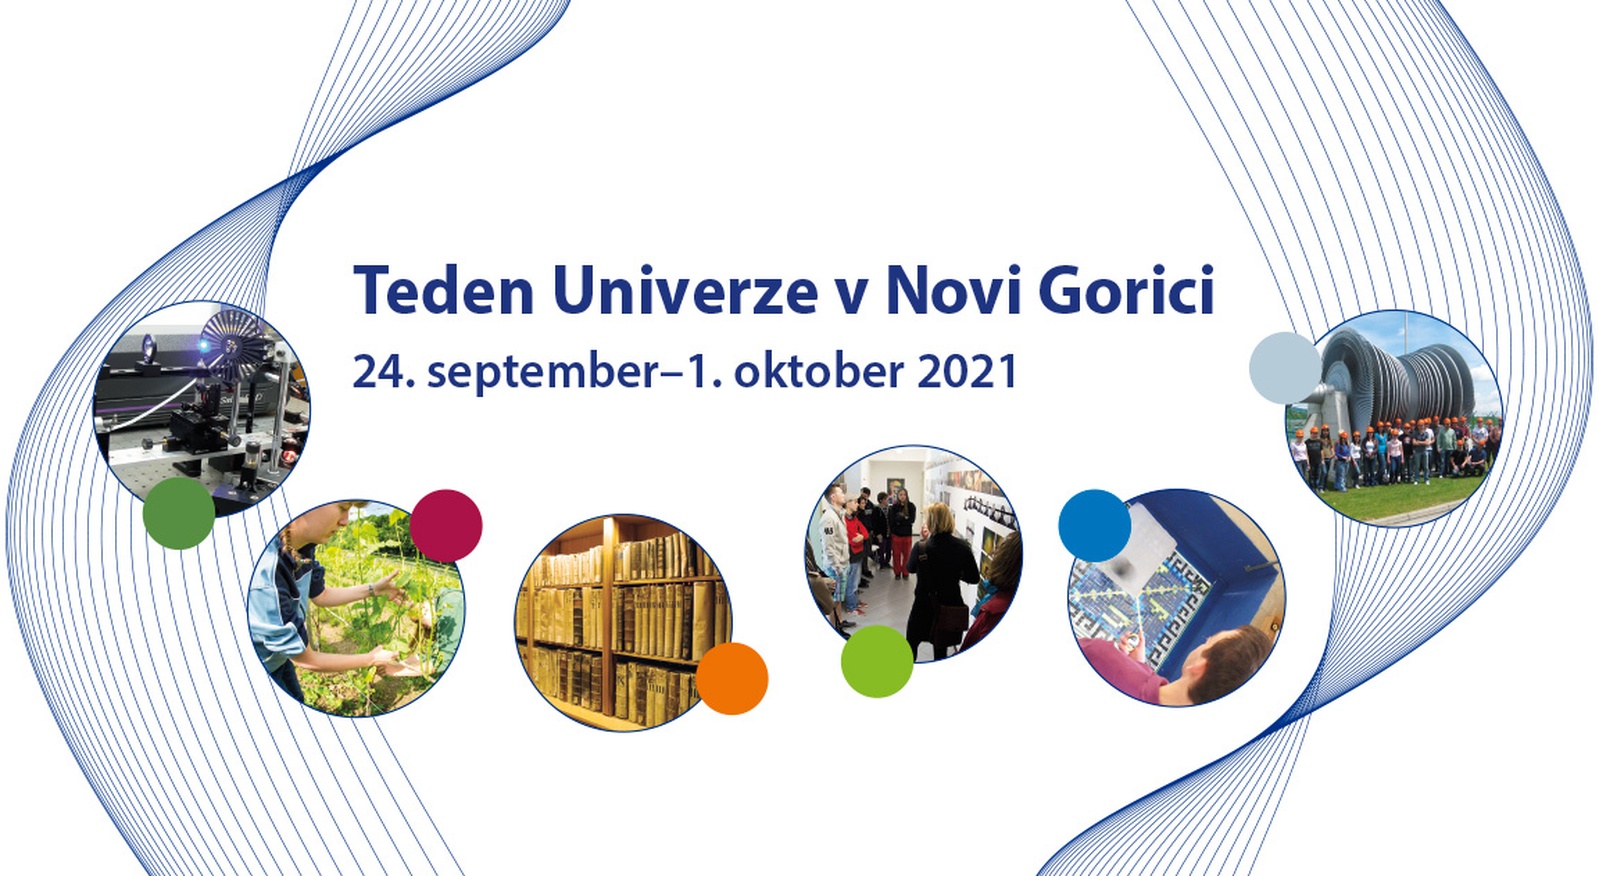 Teden Univerze v Novi Gorici 2021